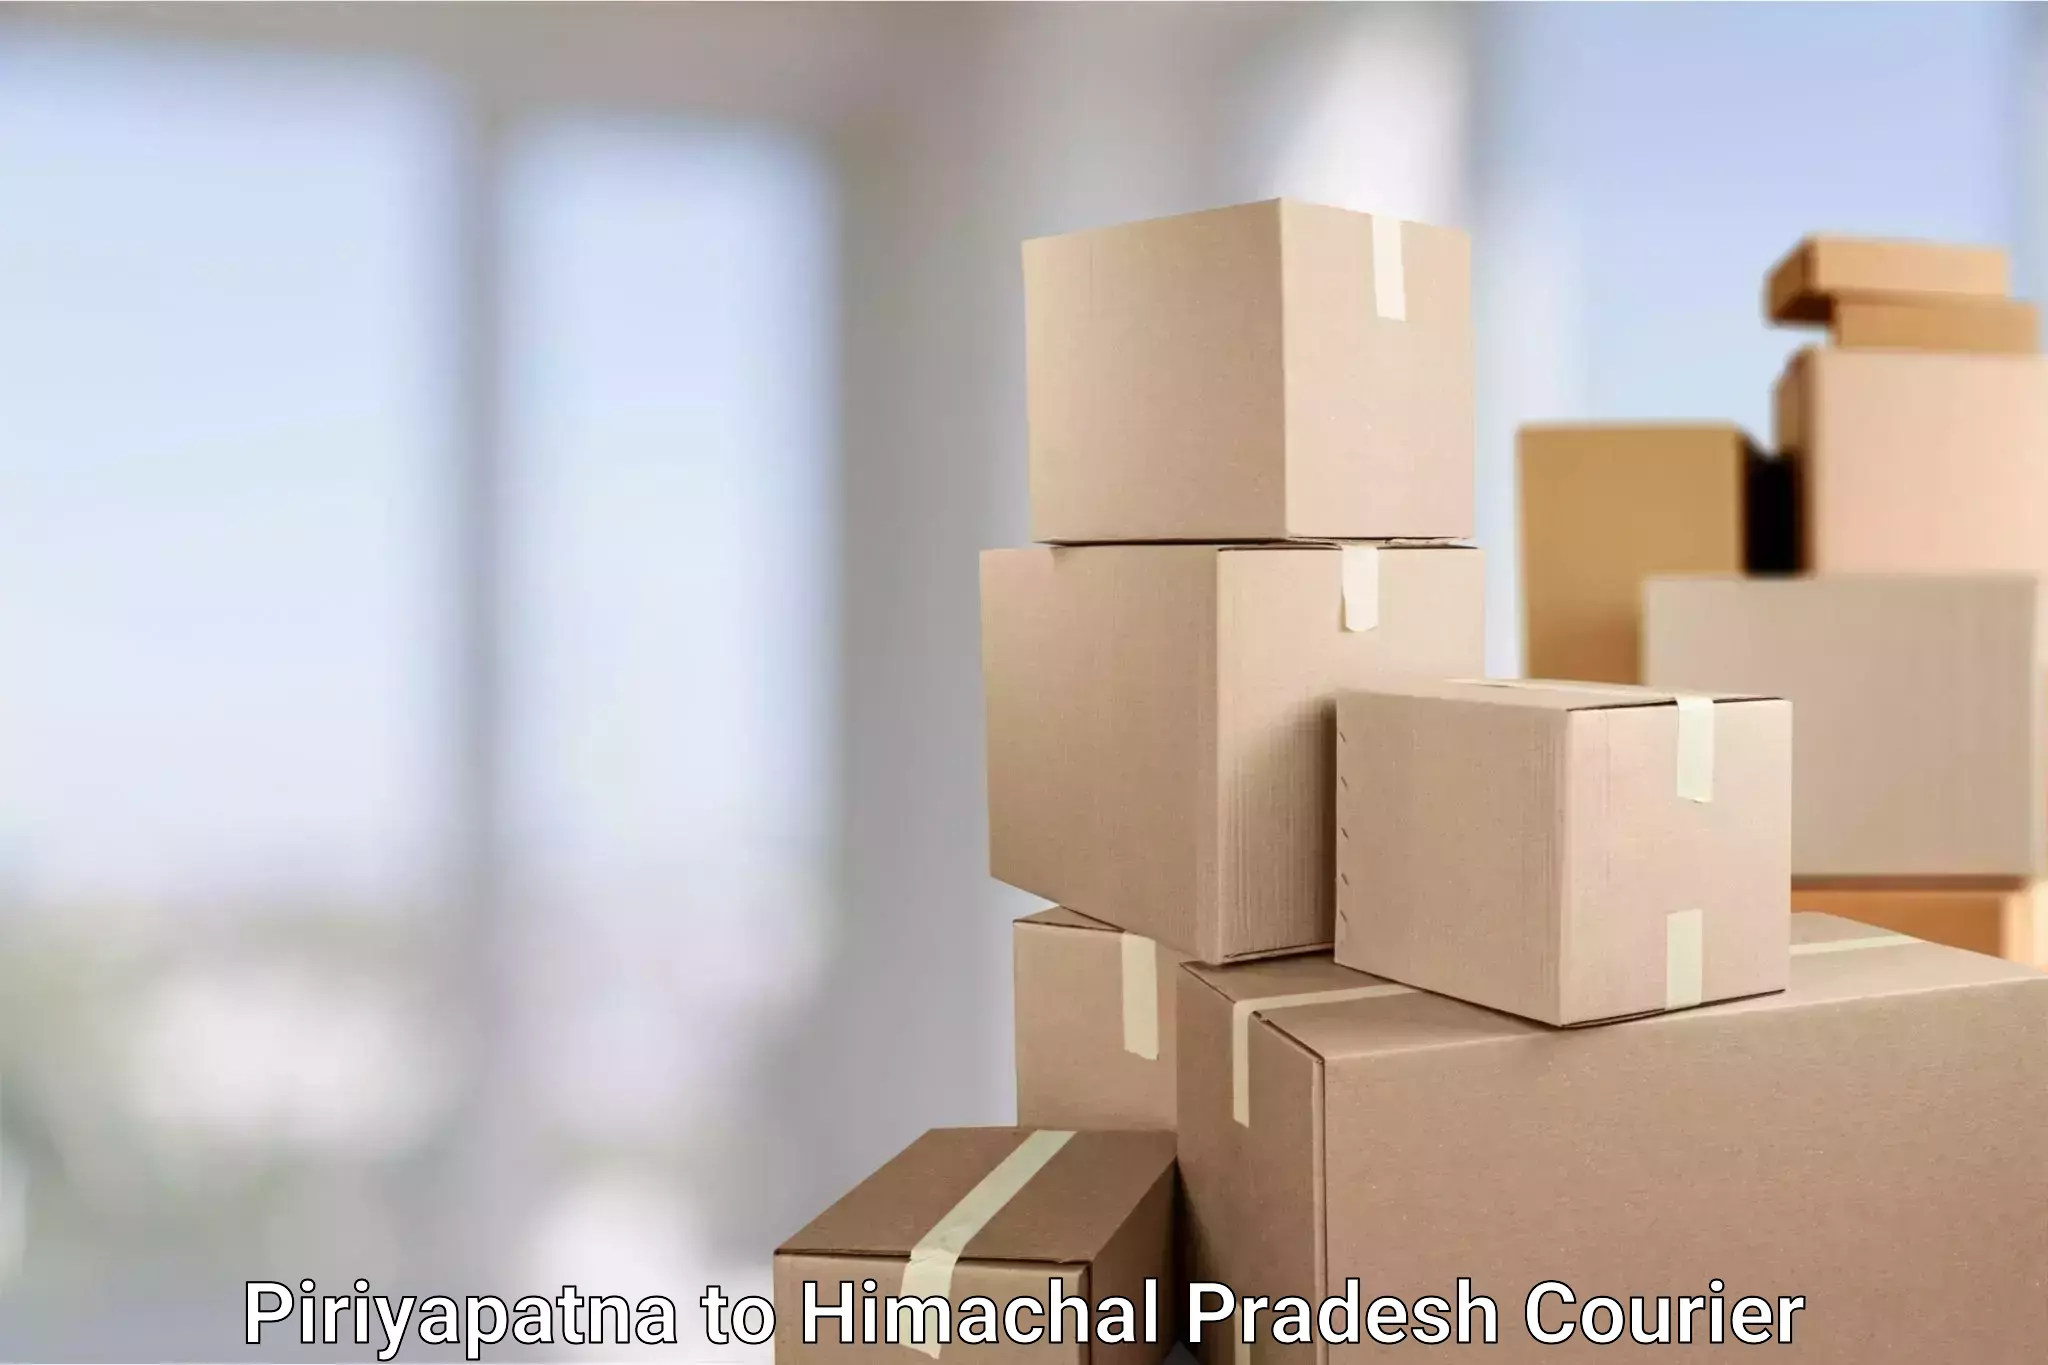 Full-service courier options Piriyapatna to Una Himachal Pradesh